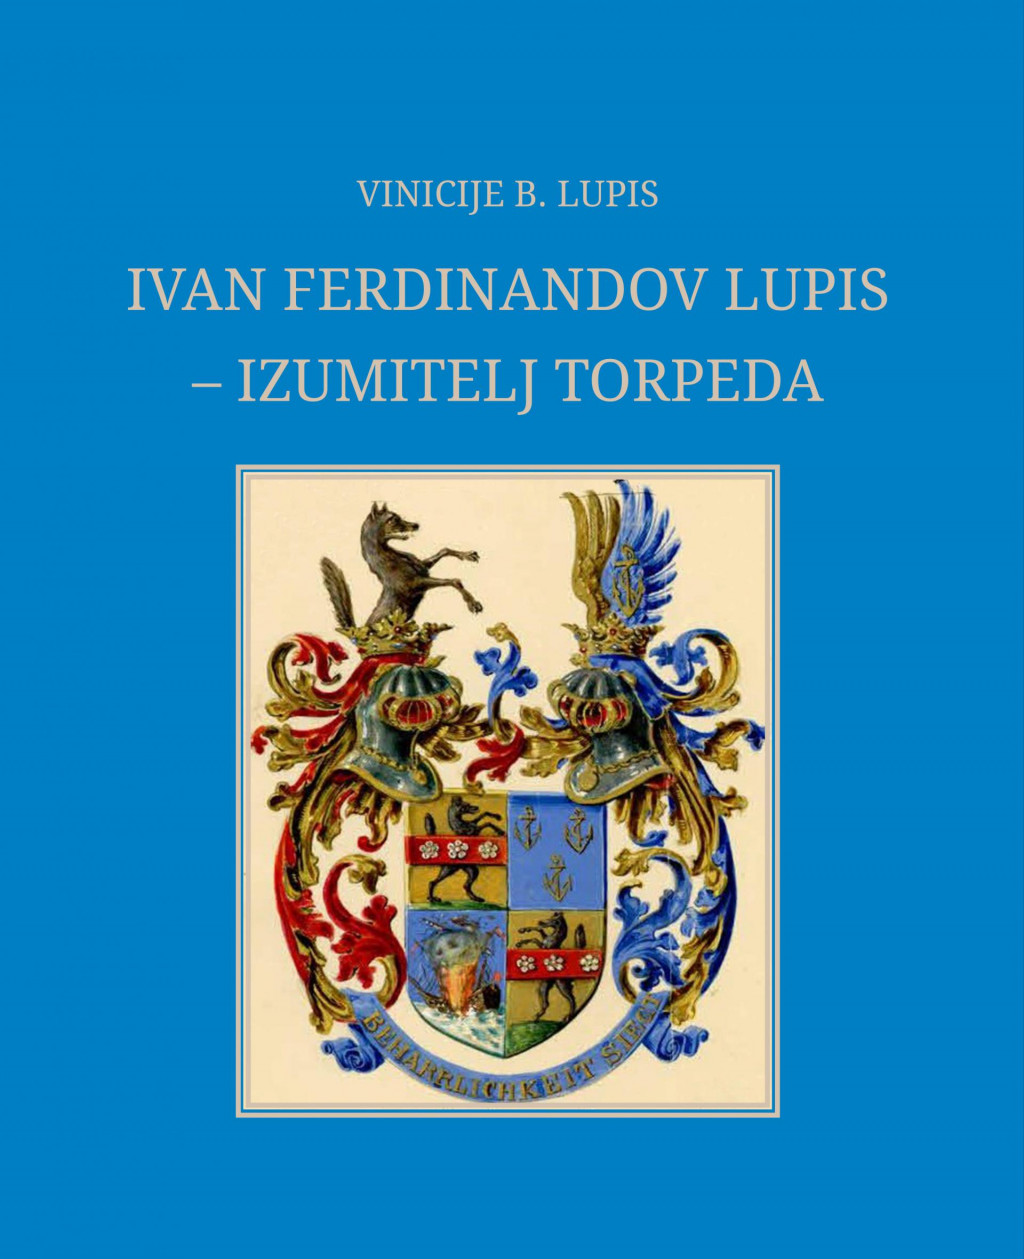 Naslovnica knjige: Ivan Ferdinandov Lupis - izumitelj torpeda